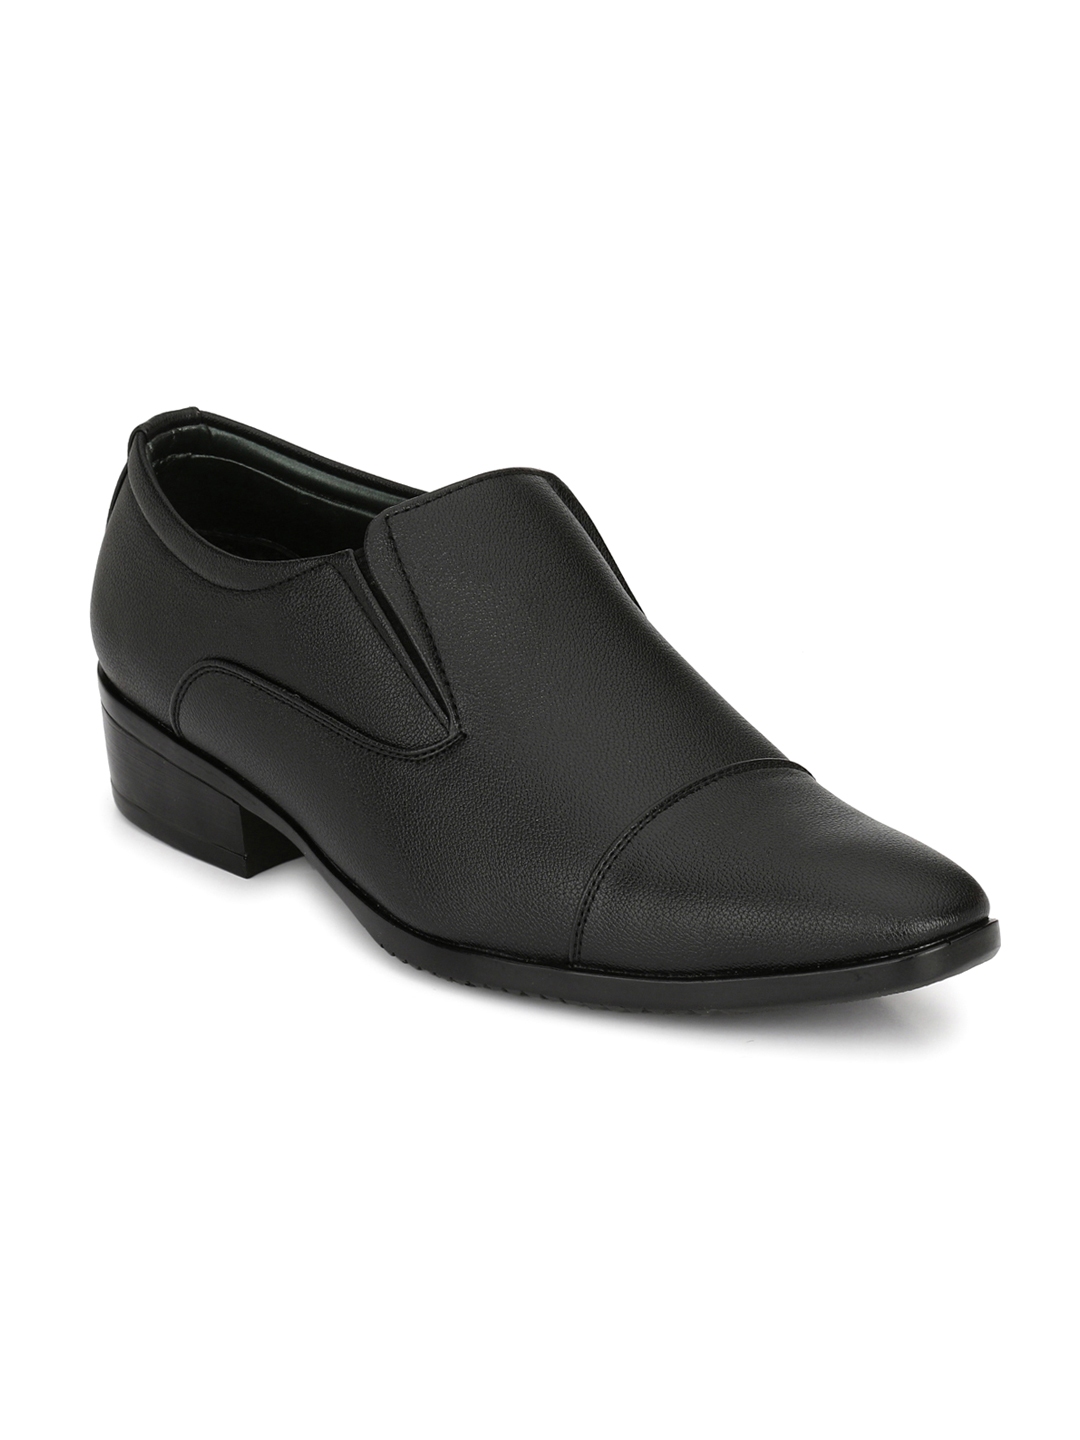 Buy Mactree Men Black Formal Shoes - Formal Shoes for Men 1379978 | Myntra